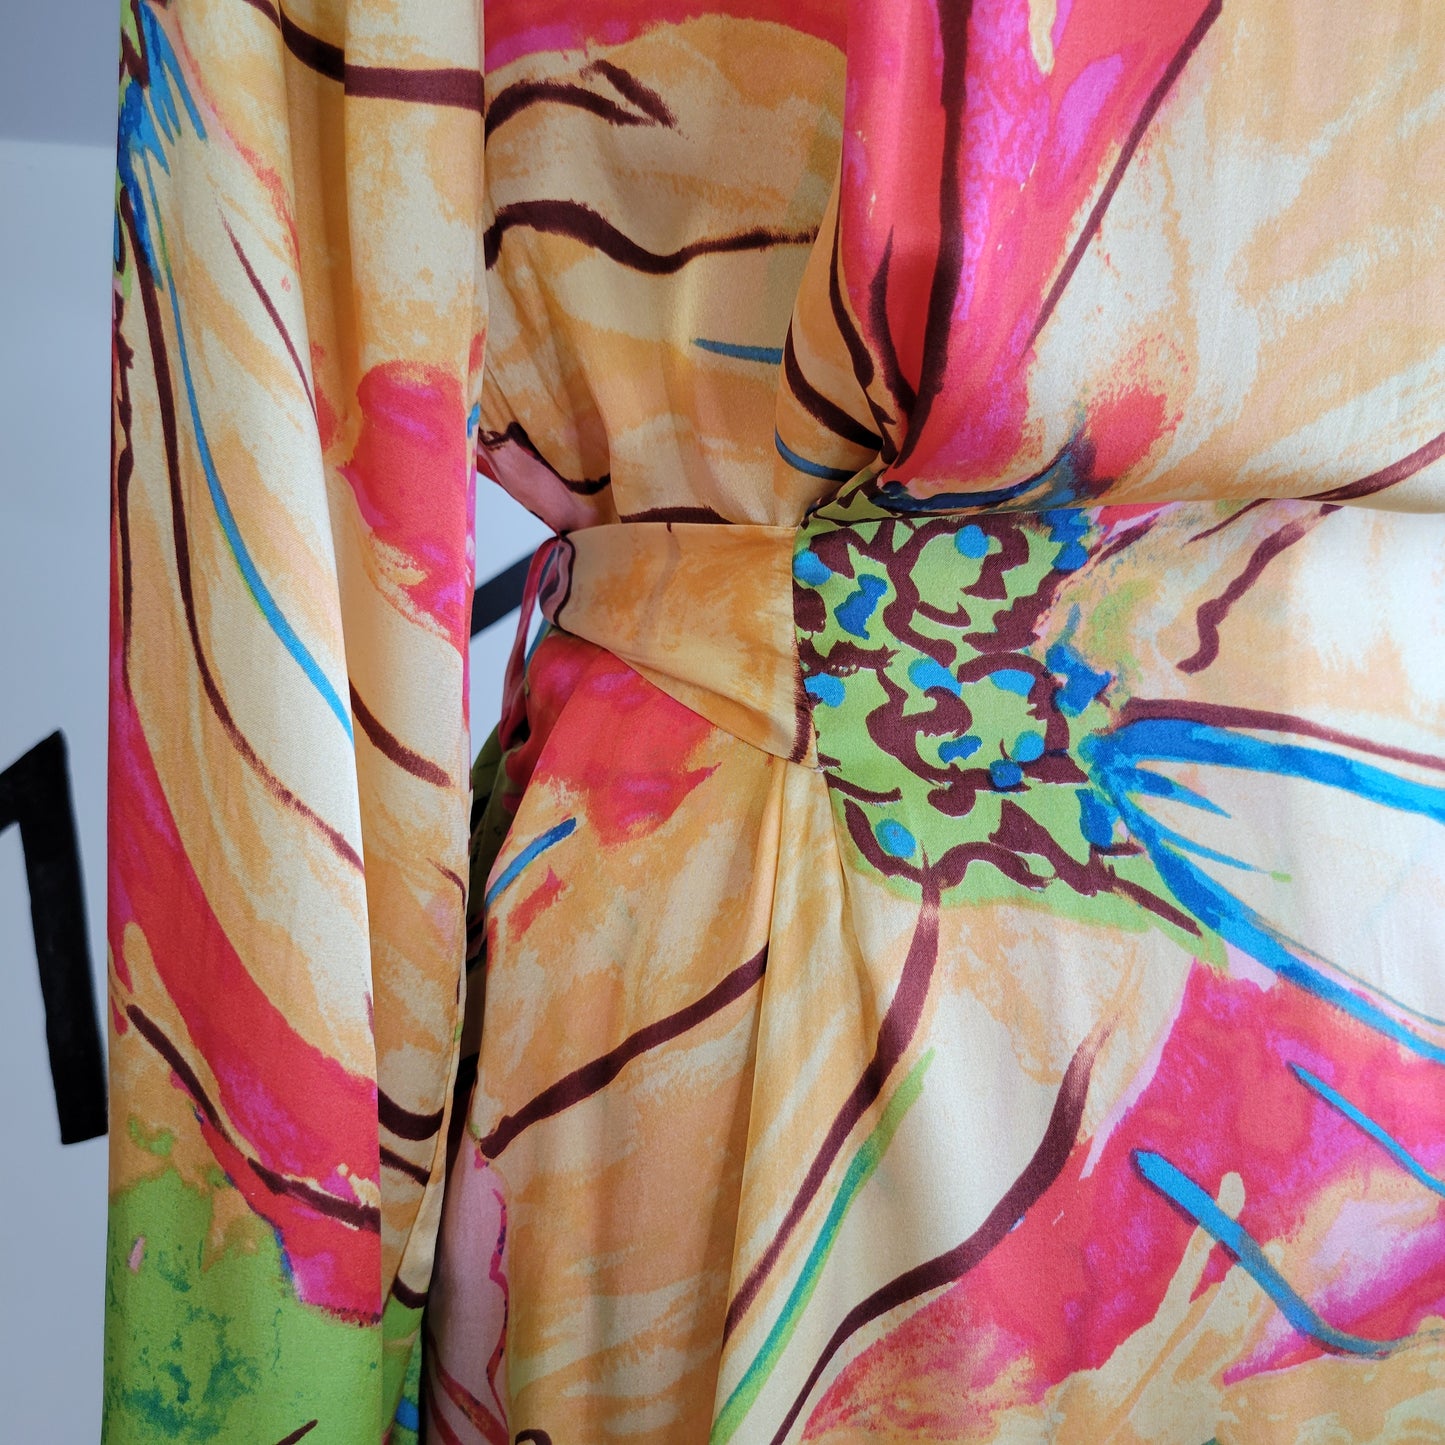 WinterSilks Floral Print Slip Dress and Robe Two Piece Set - Large